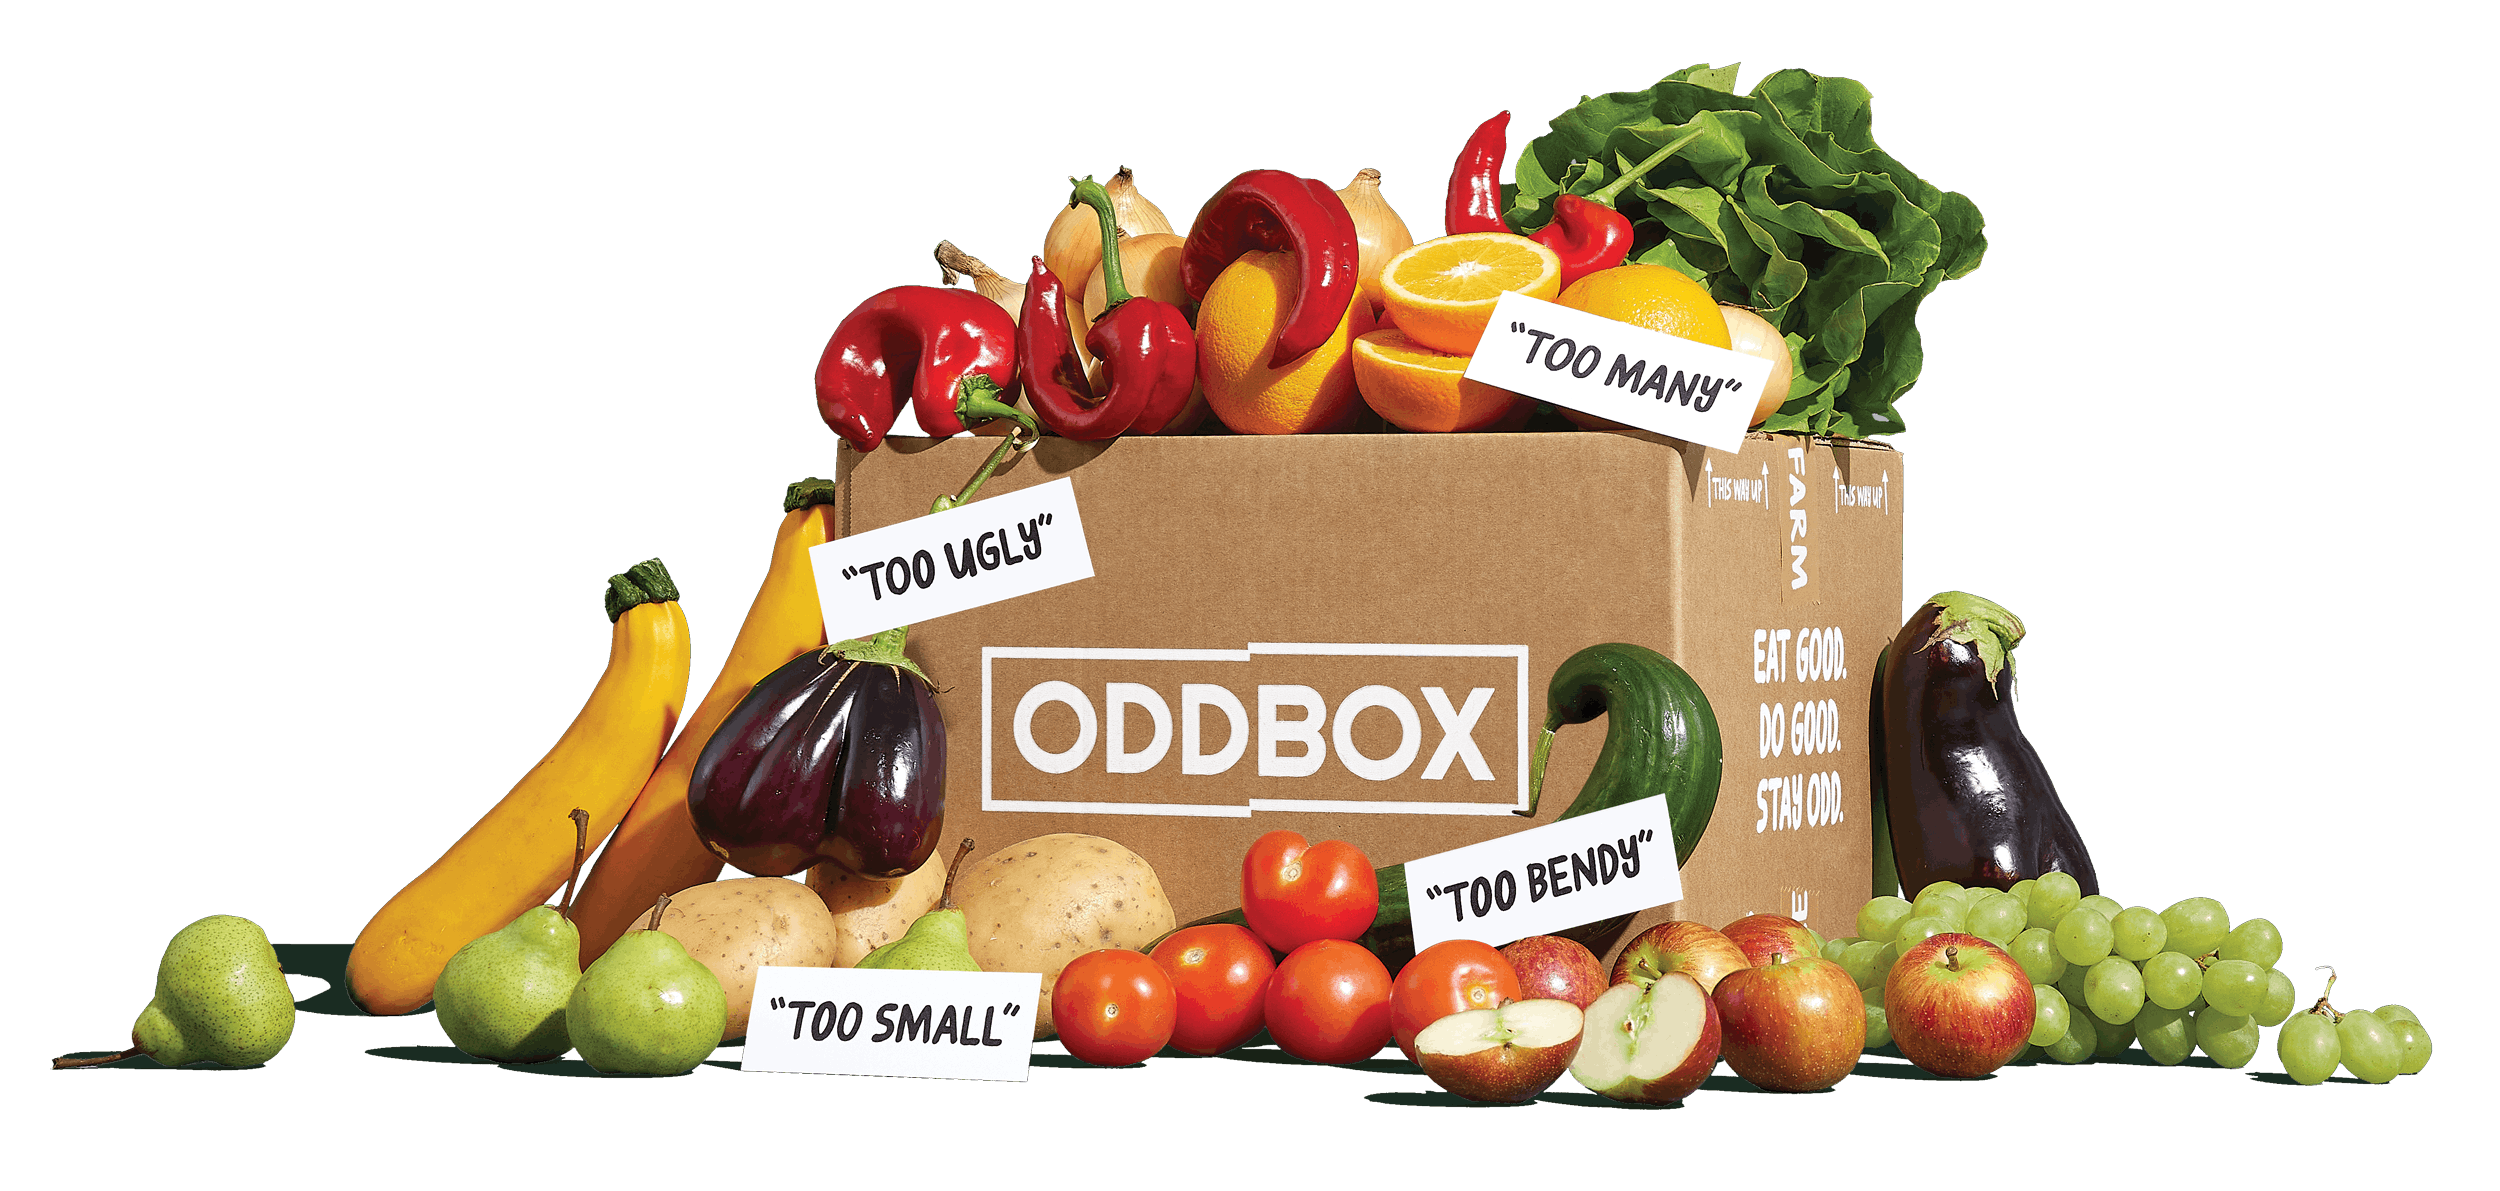 Oddbox Fruit and Vegetable box